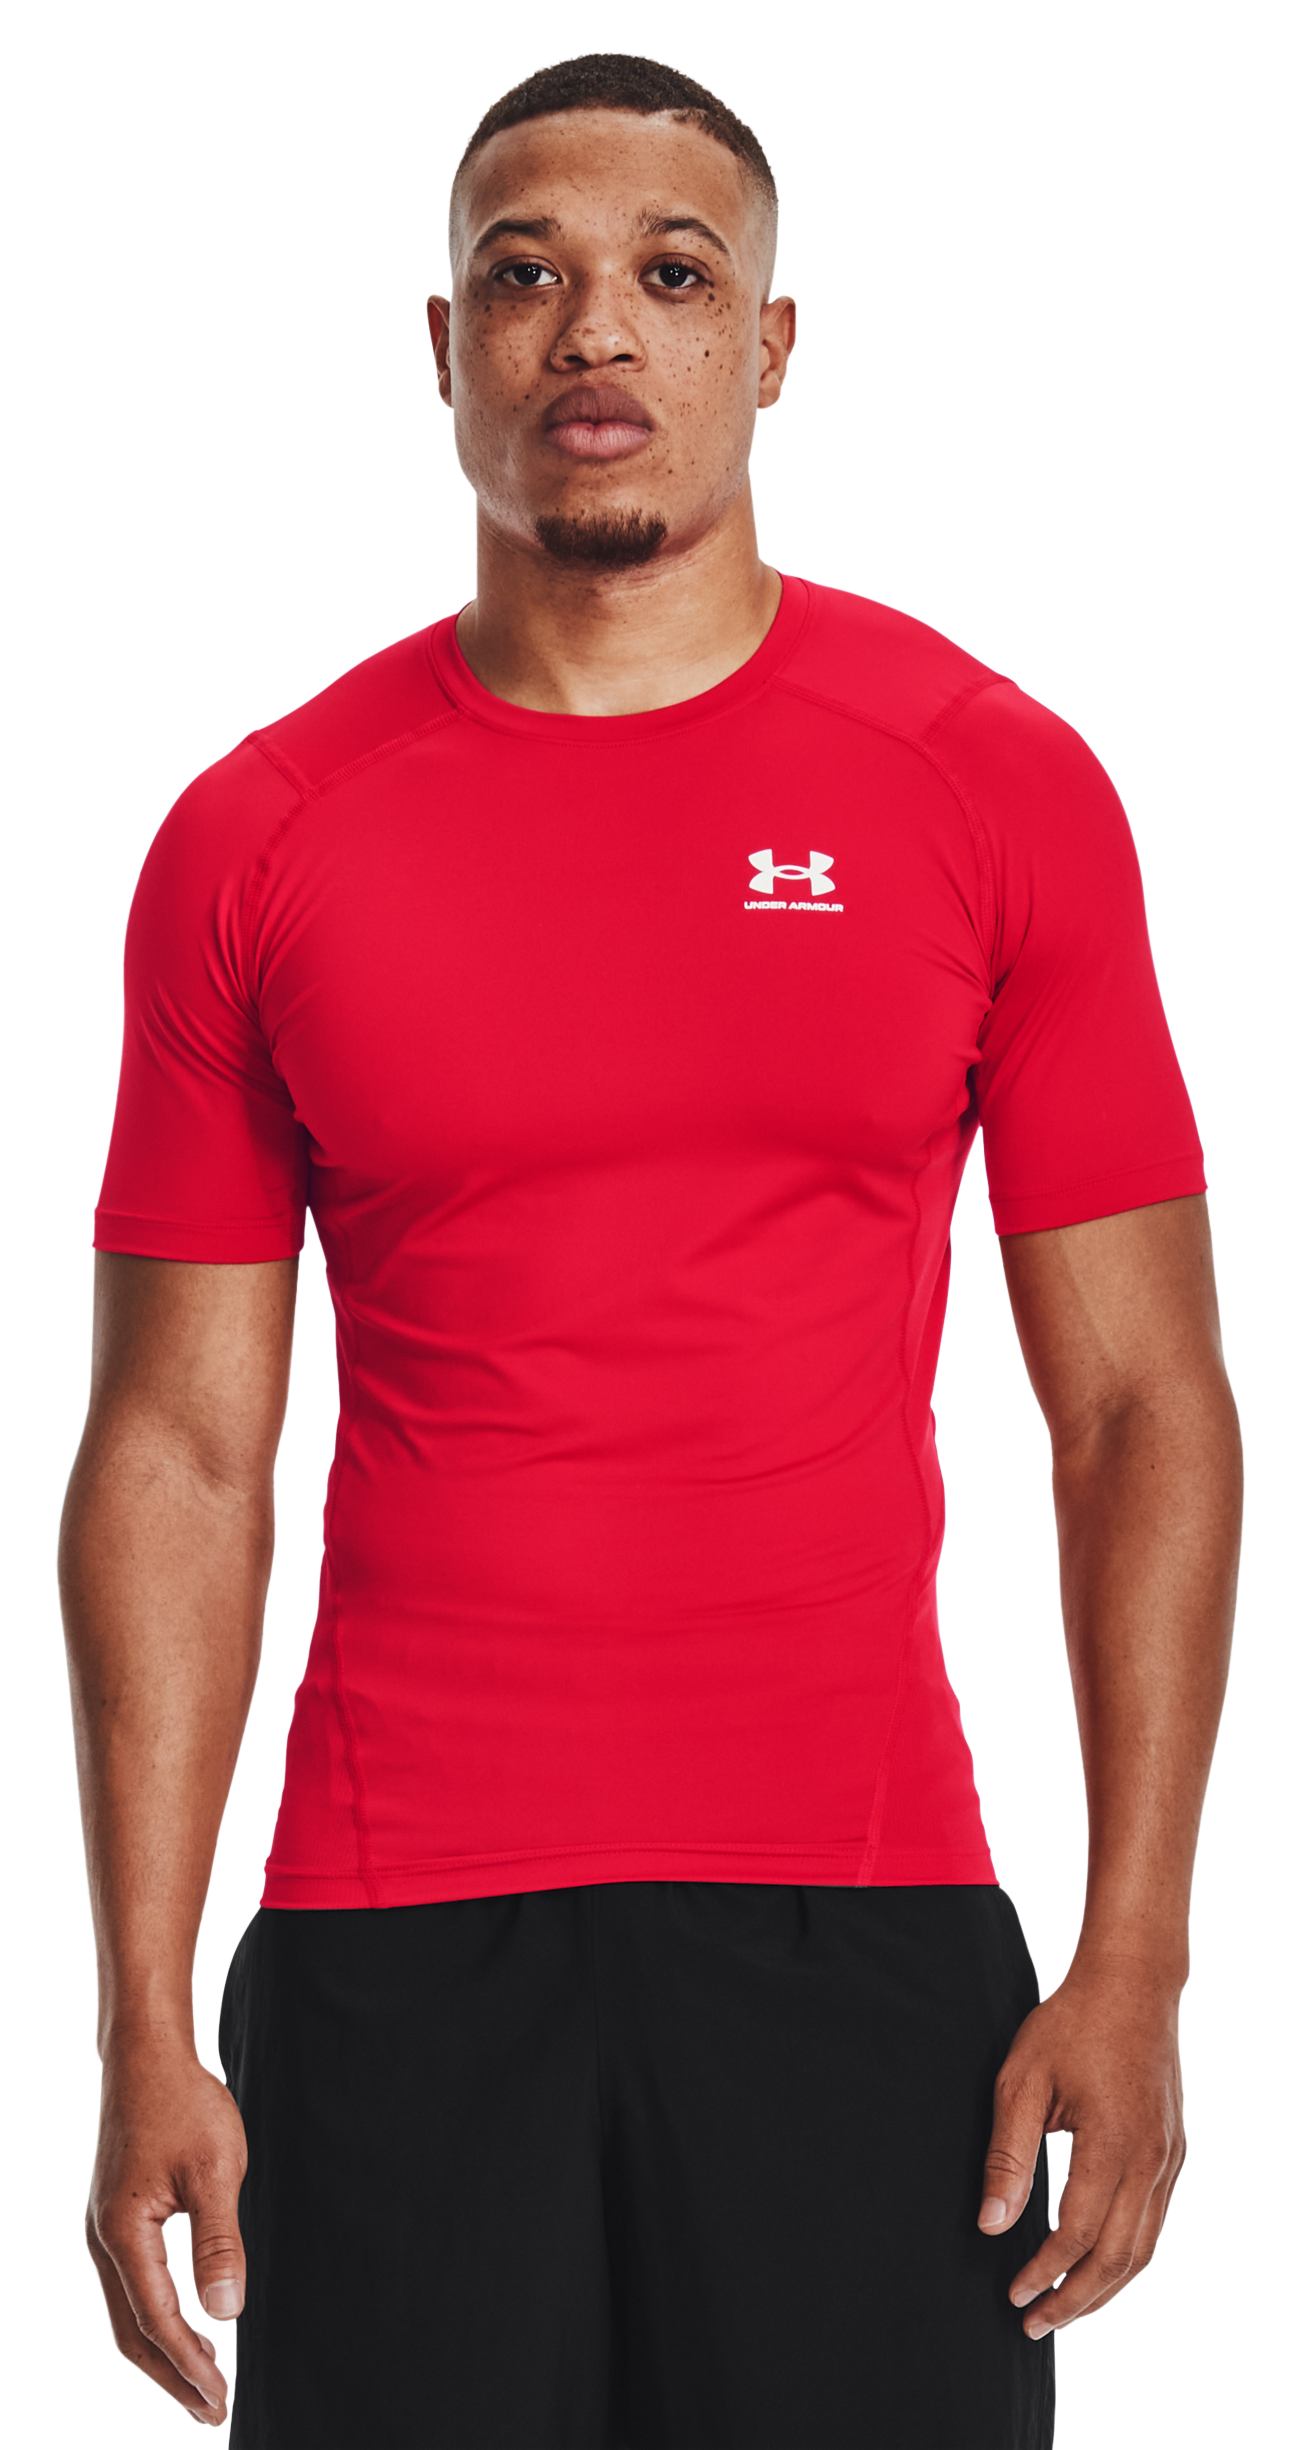 Under Armour HeatGear Short-Sleeve T-Shirt for Men - Red/White - XLT